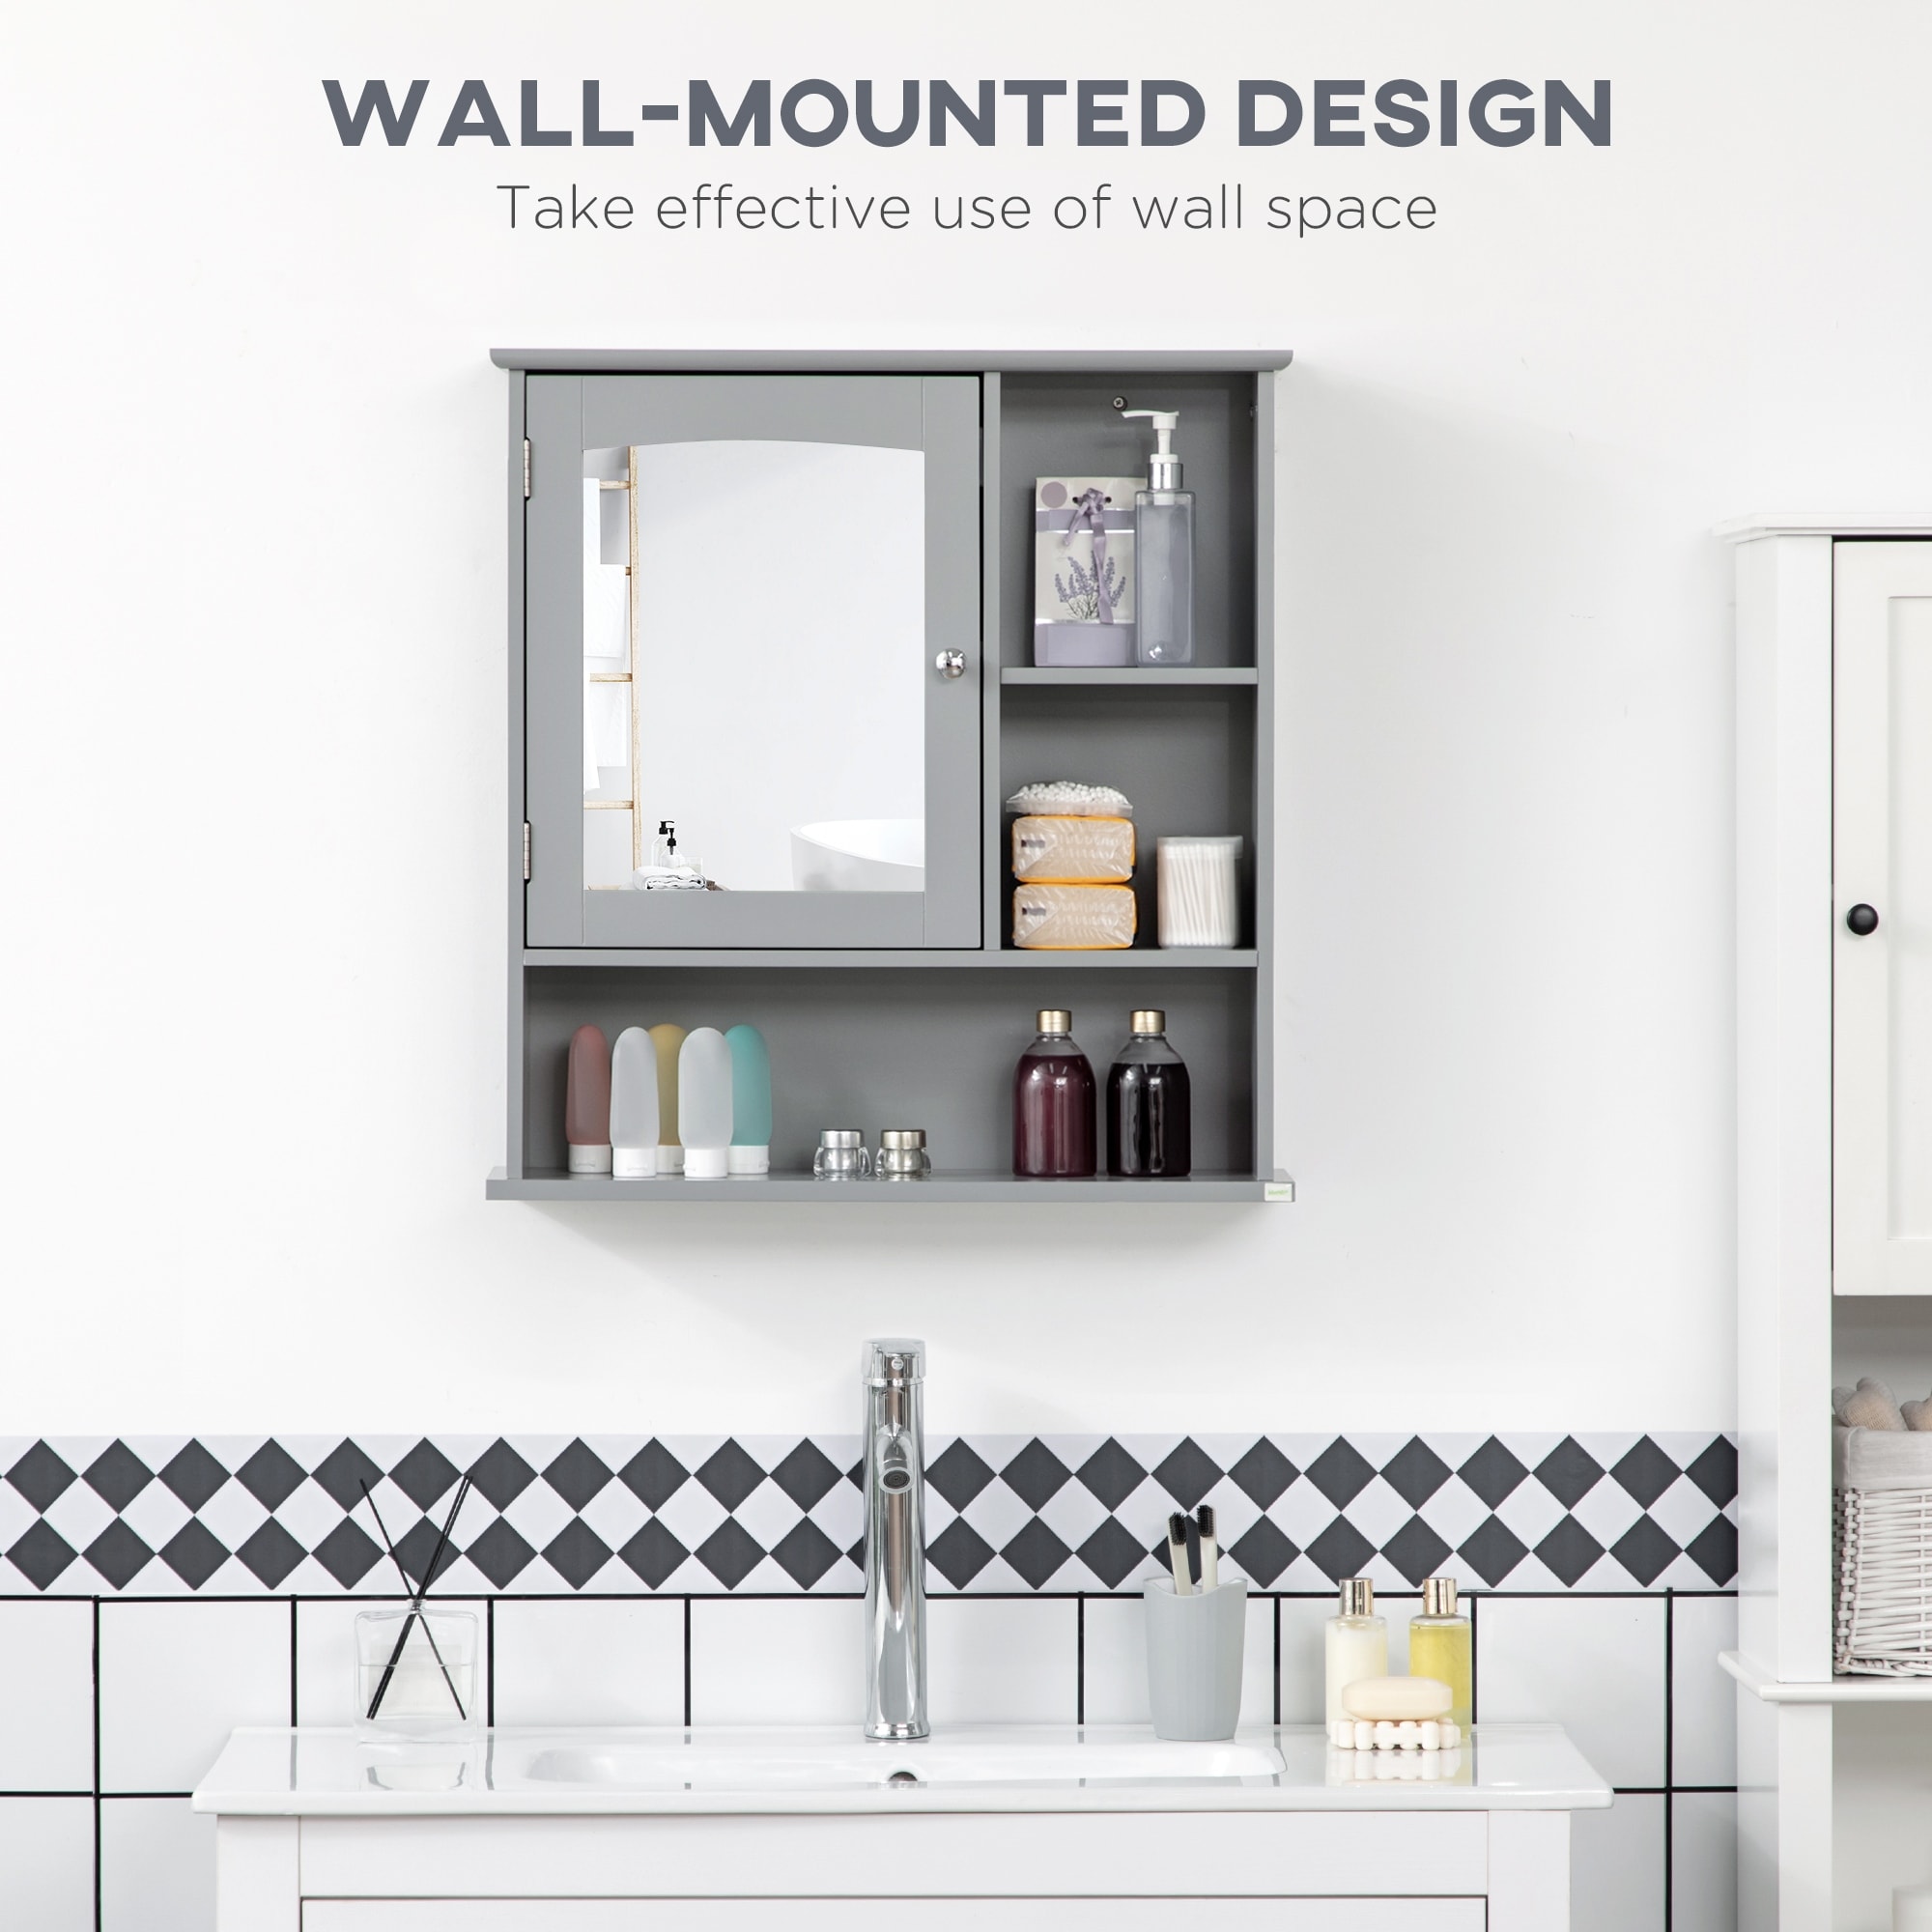 kleankin Wall-Mounted Bathroom Storage Cabinet Organizer with